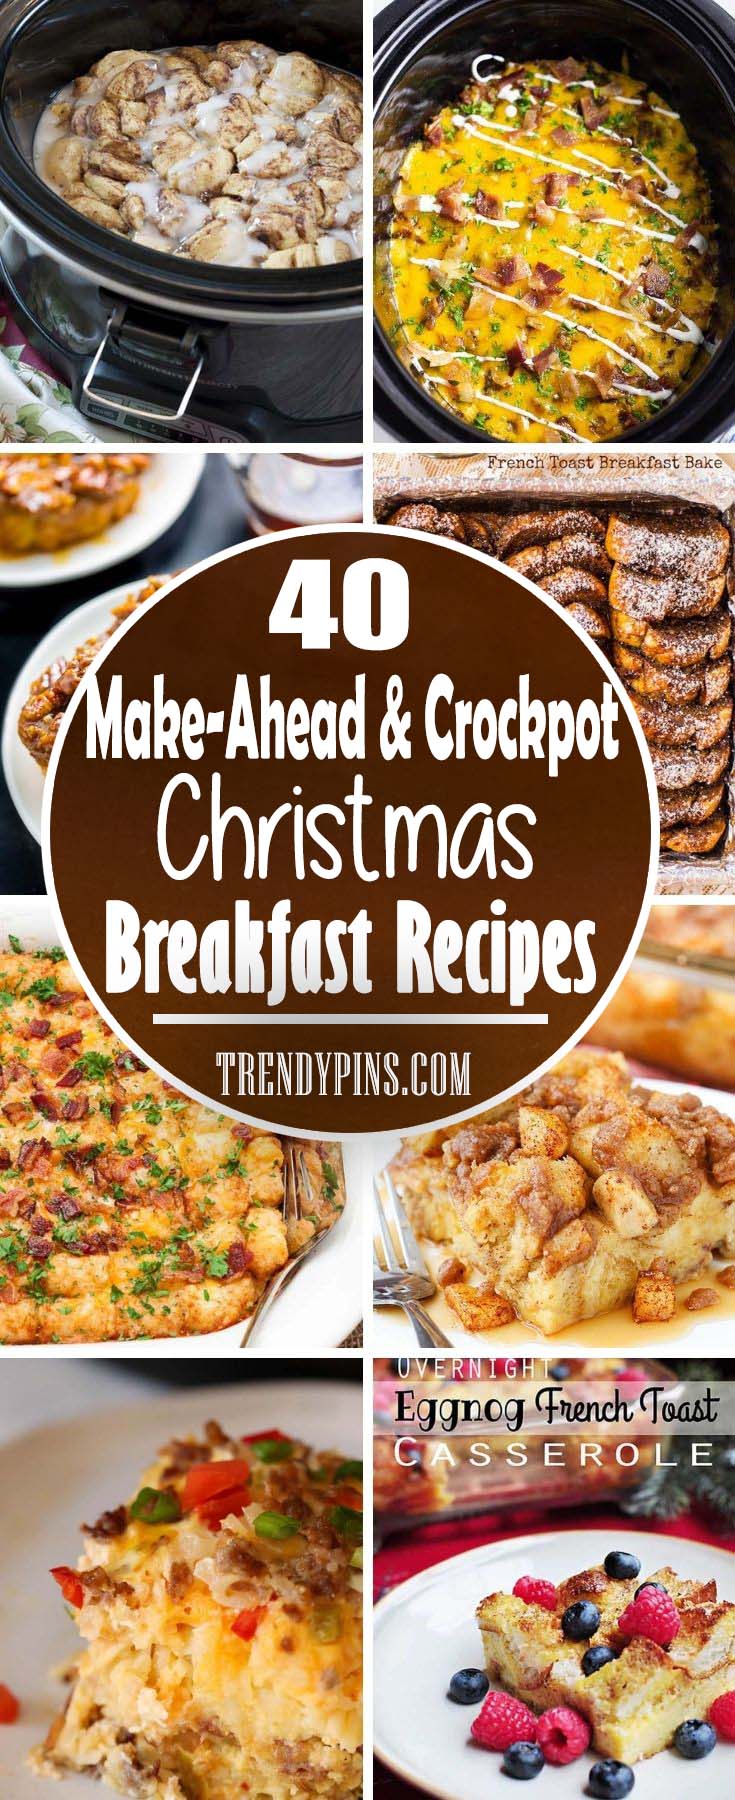 20 Make Ahead And Crockpot Christmas Breakfast Recipes #Christmas #breakfast #food #trendypins